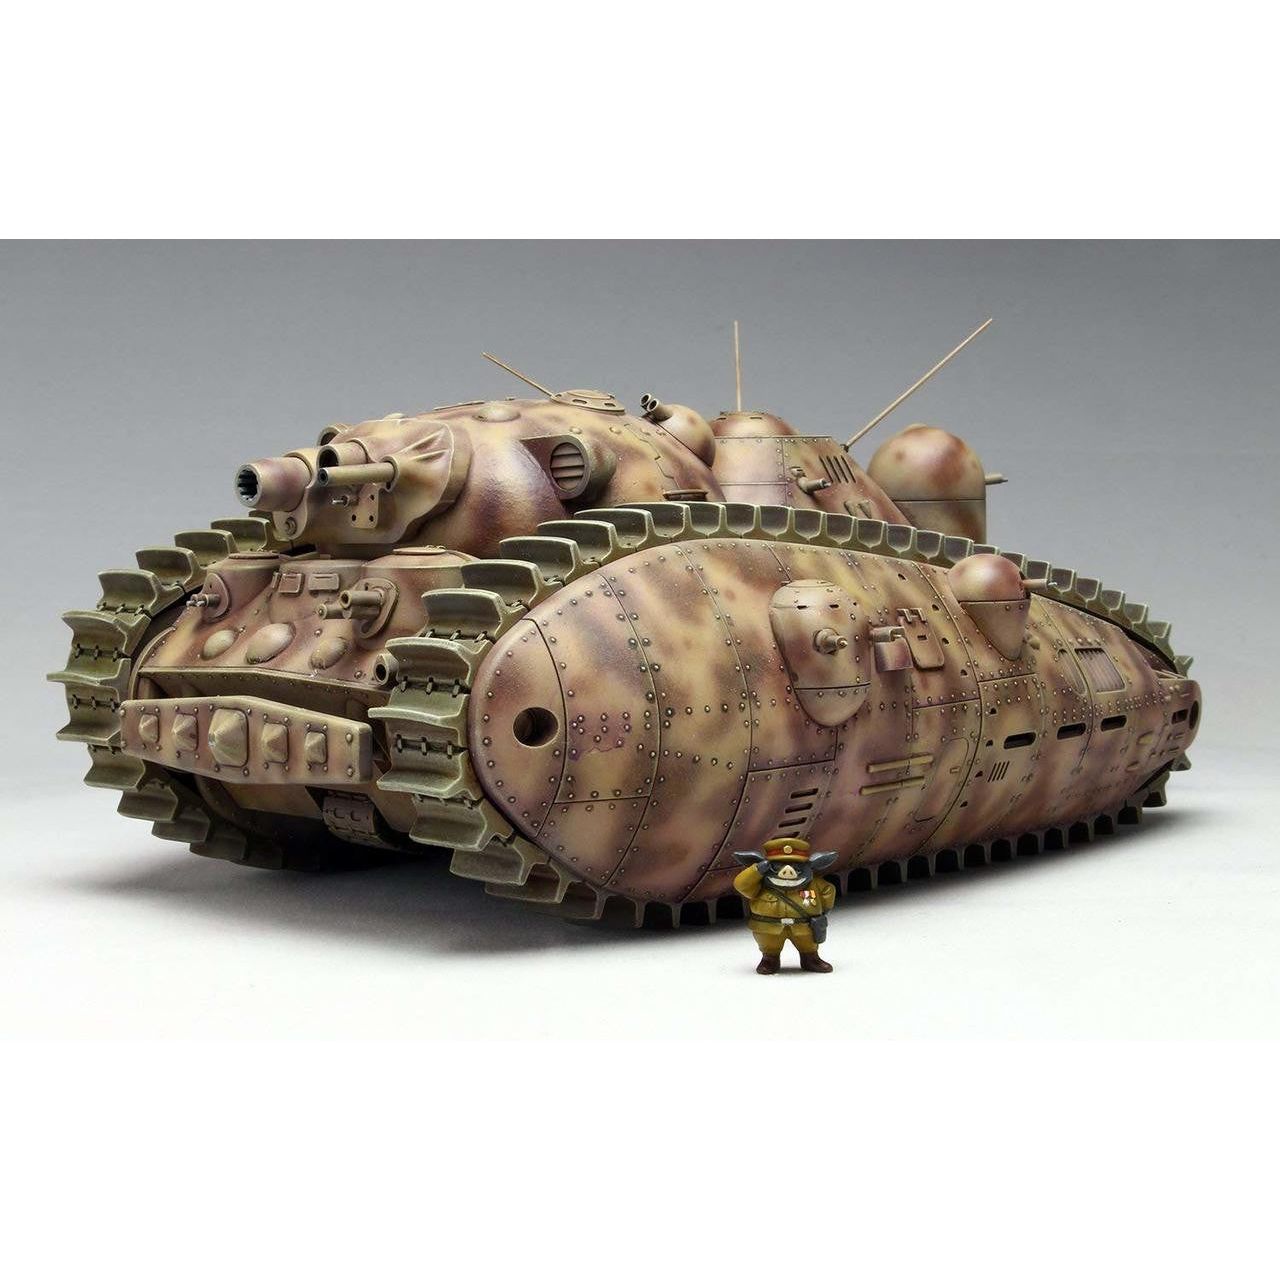 Akuyaku #1 Short Gun Barrel Ver. Studio Ghibli Tank 1/72 by Asuka